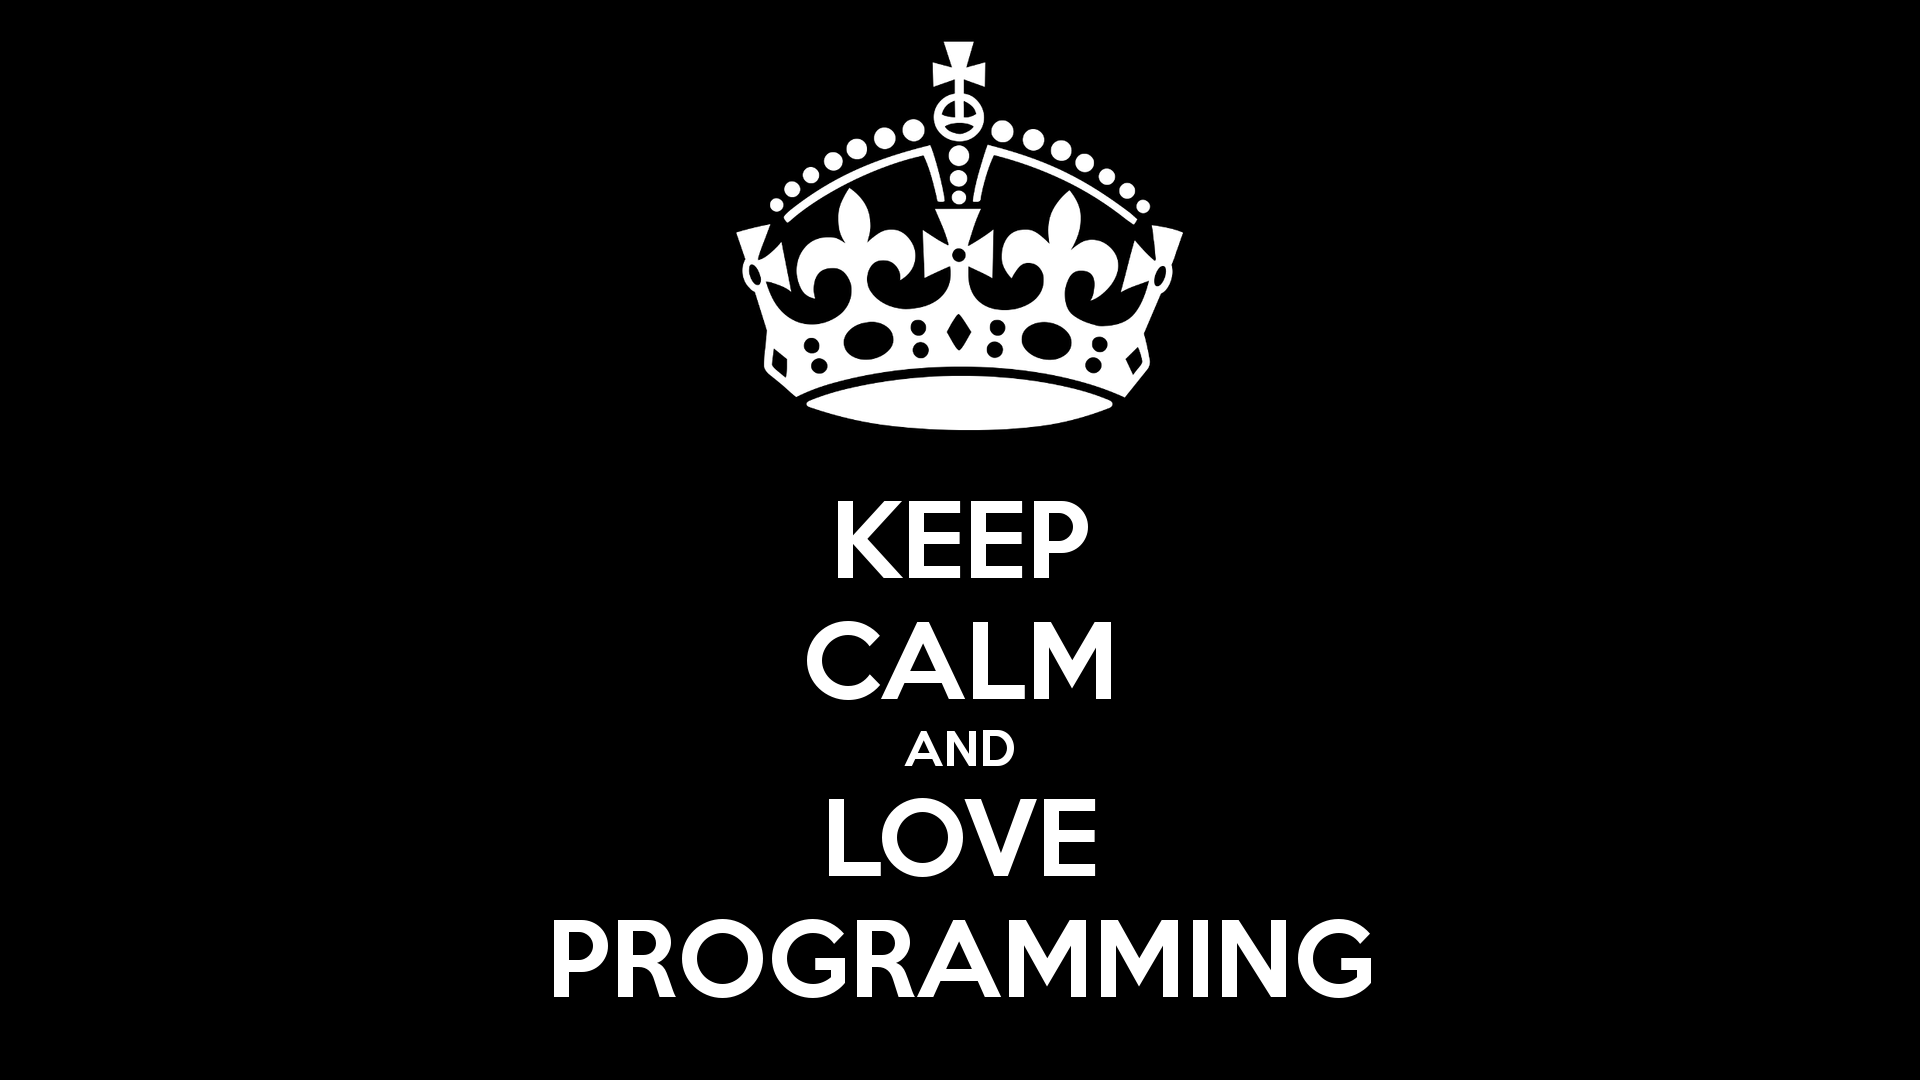 Download Programmer Motivational Quote Wallpaper | Wallpapers.com